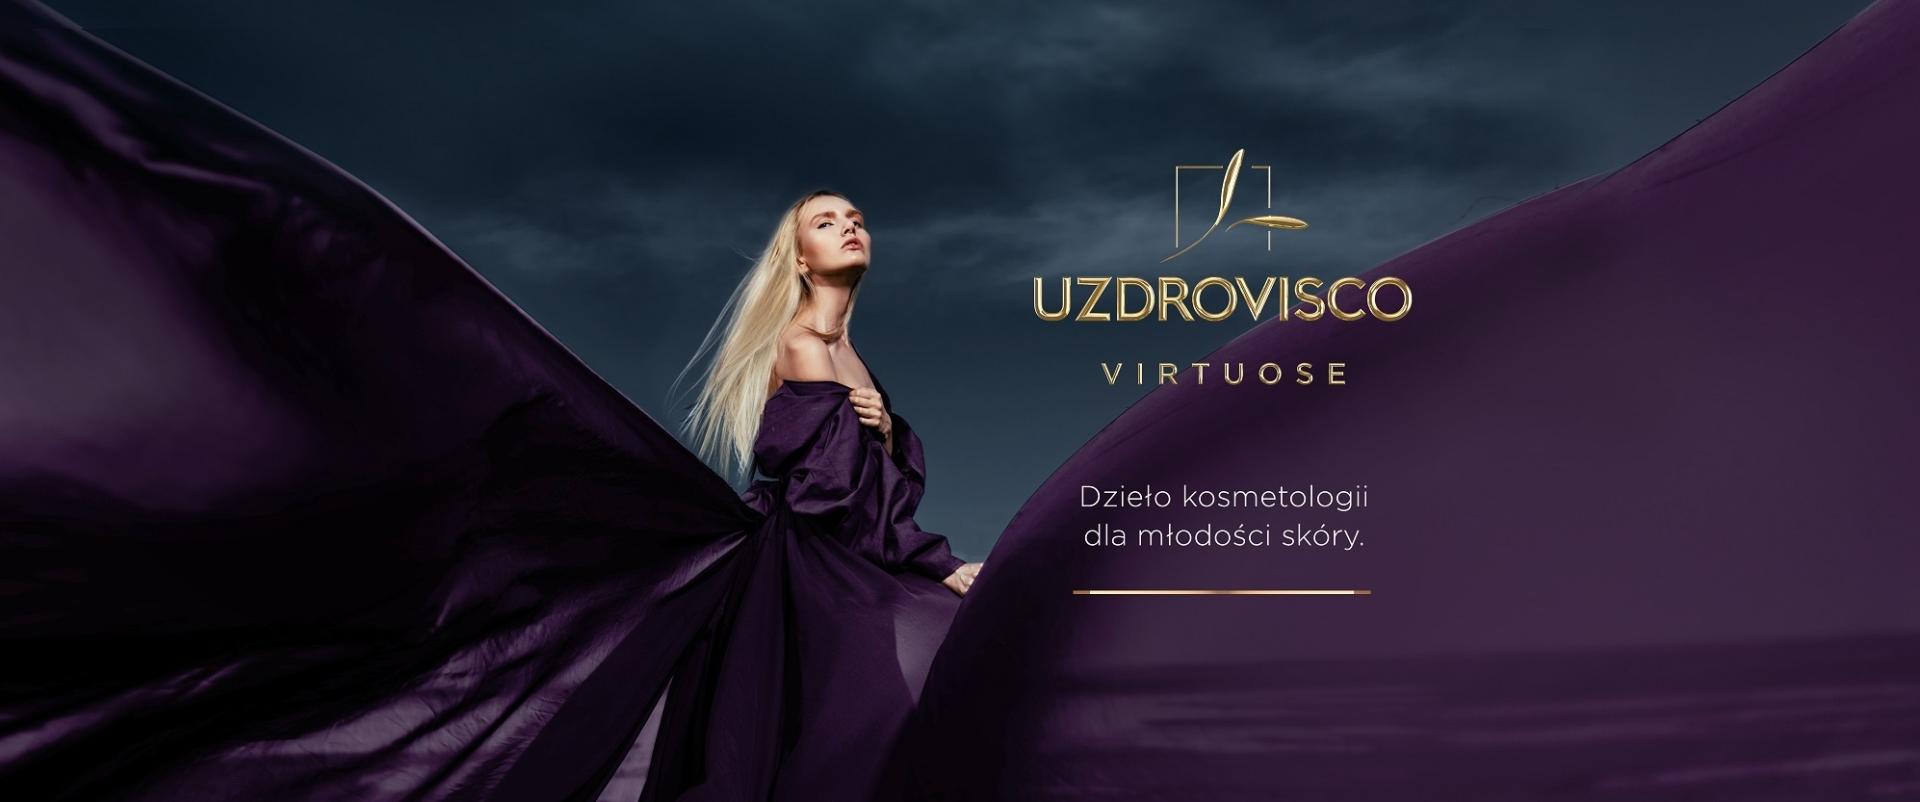 Na rynku debiutuje nowa linia Uzdrovisco - Virtuose